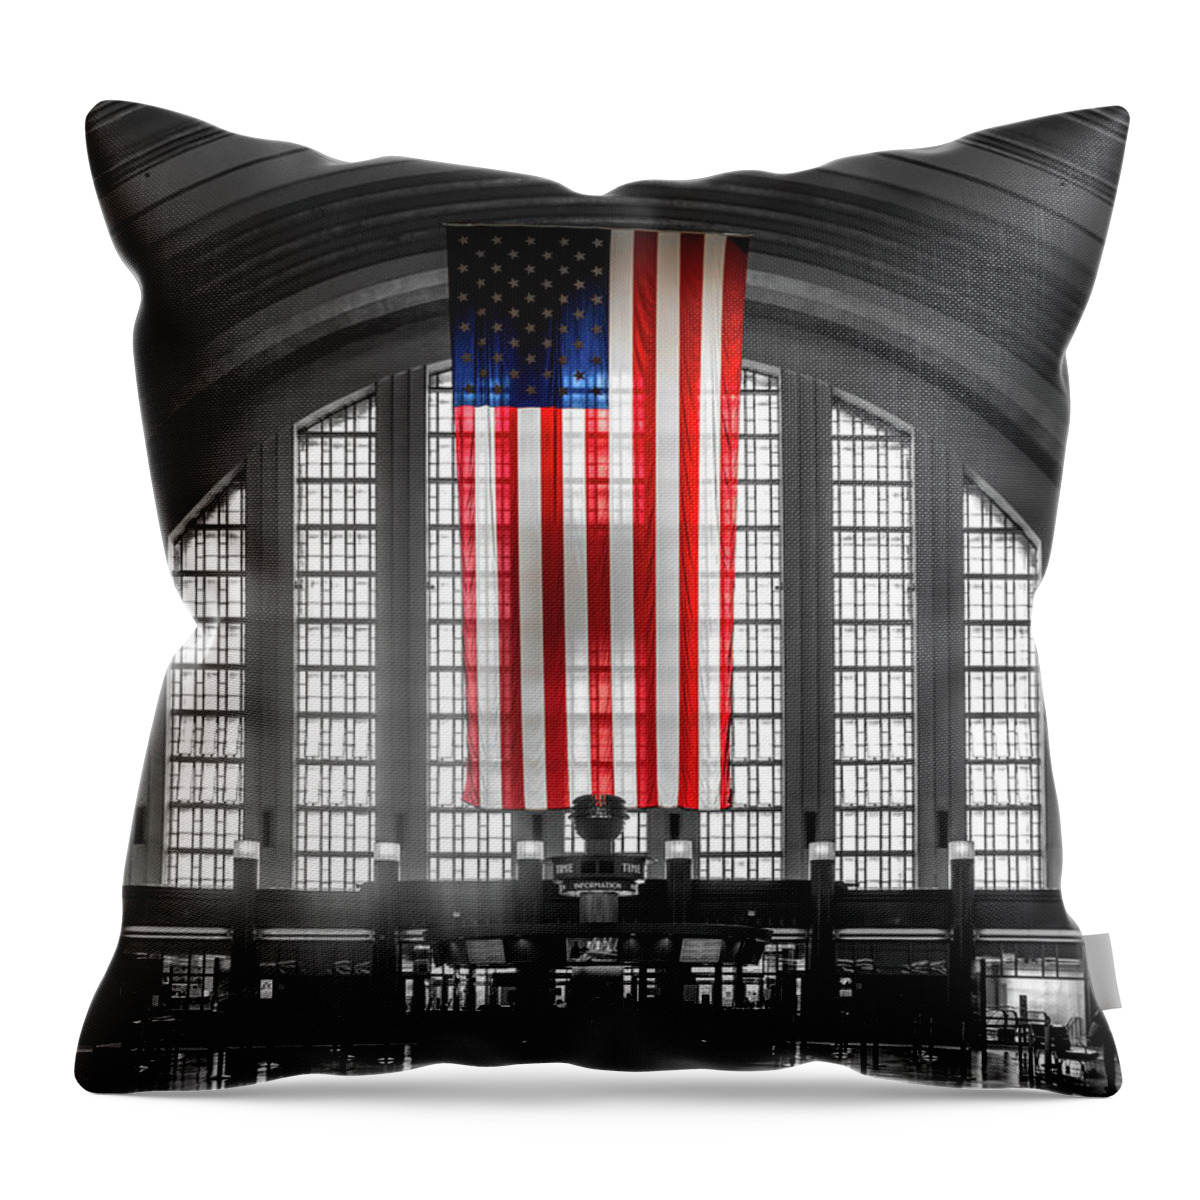 Interior Union Terminal Station Cincinnati Throw Pillow featuring the photograph Cincinnati Union Terminal Interior American Flag by Sharon Popek